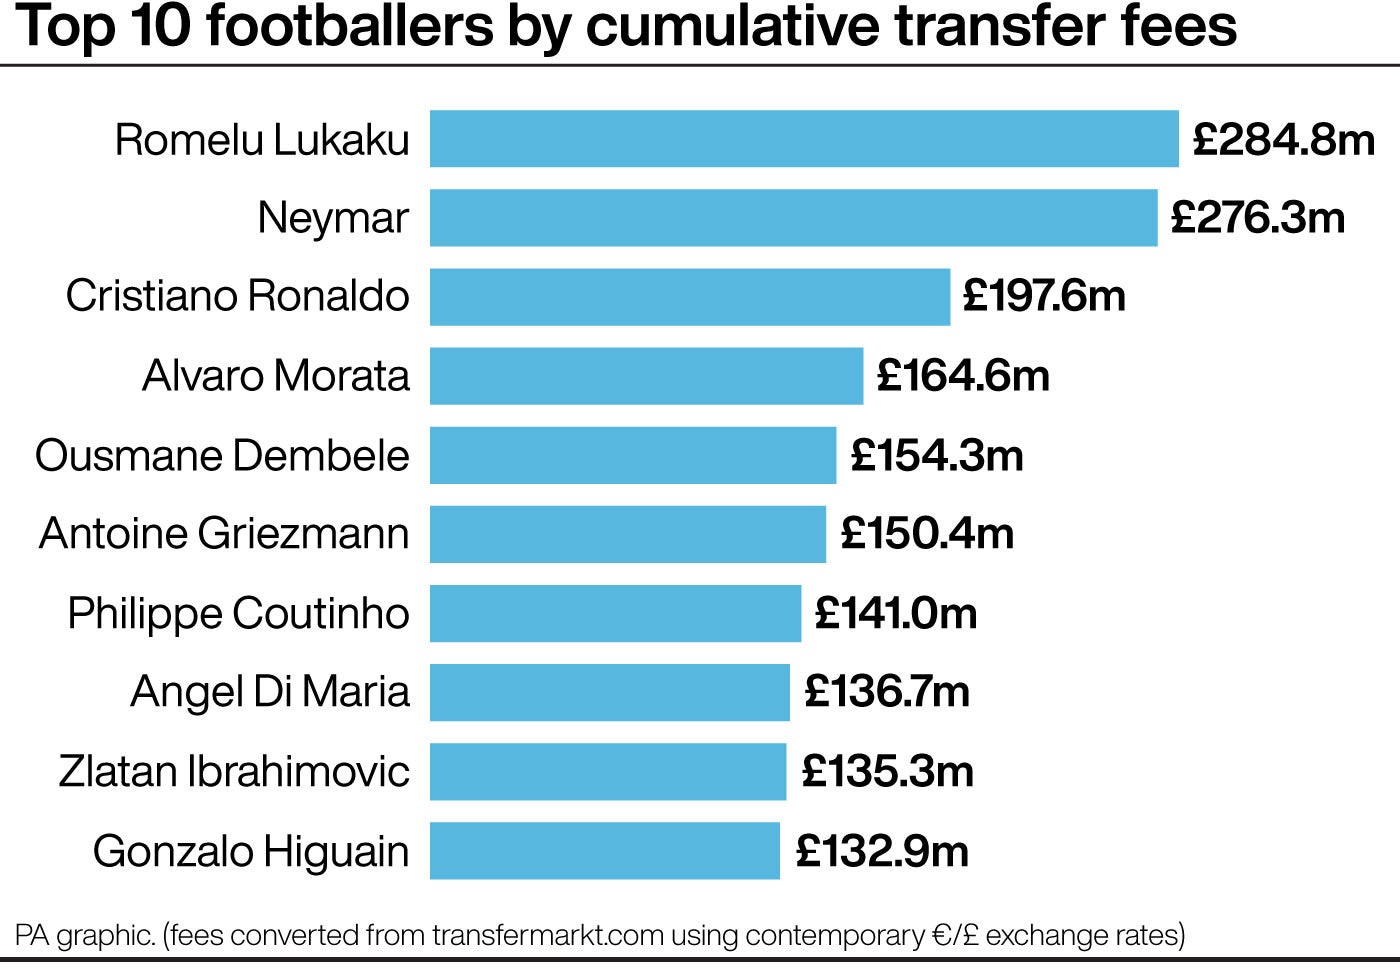 Romelu Lukaku has cost almost £285m in cumulative transfer fees (PA graphic)